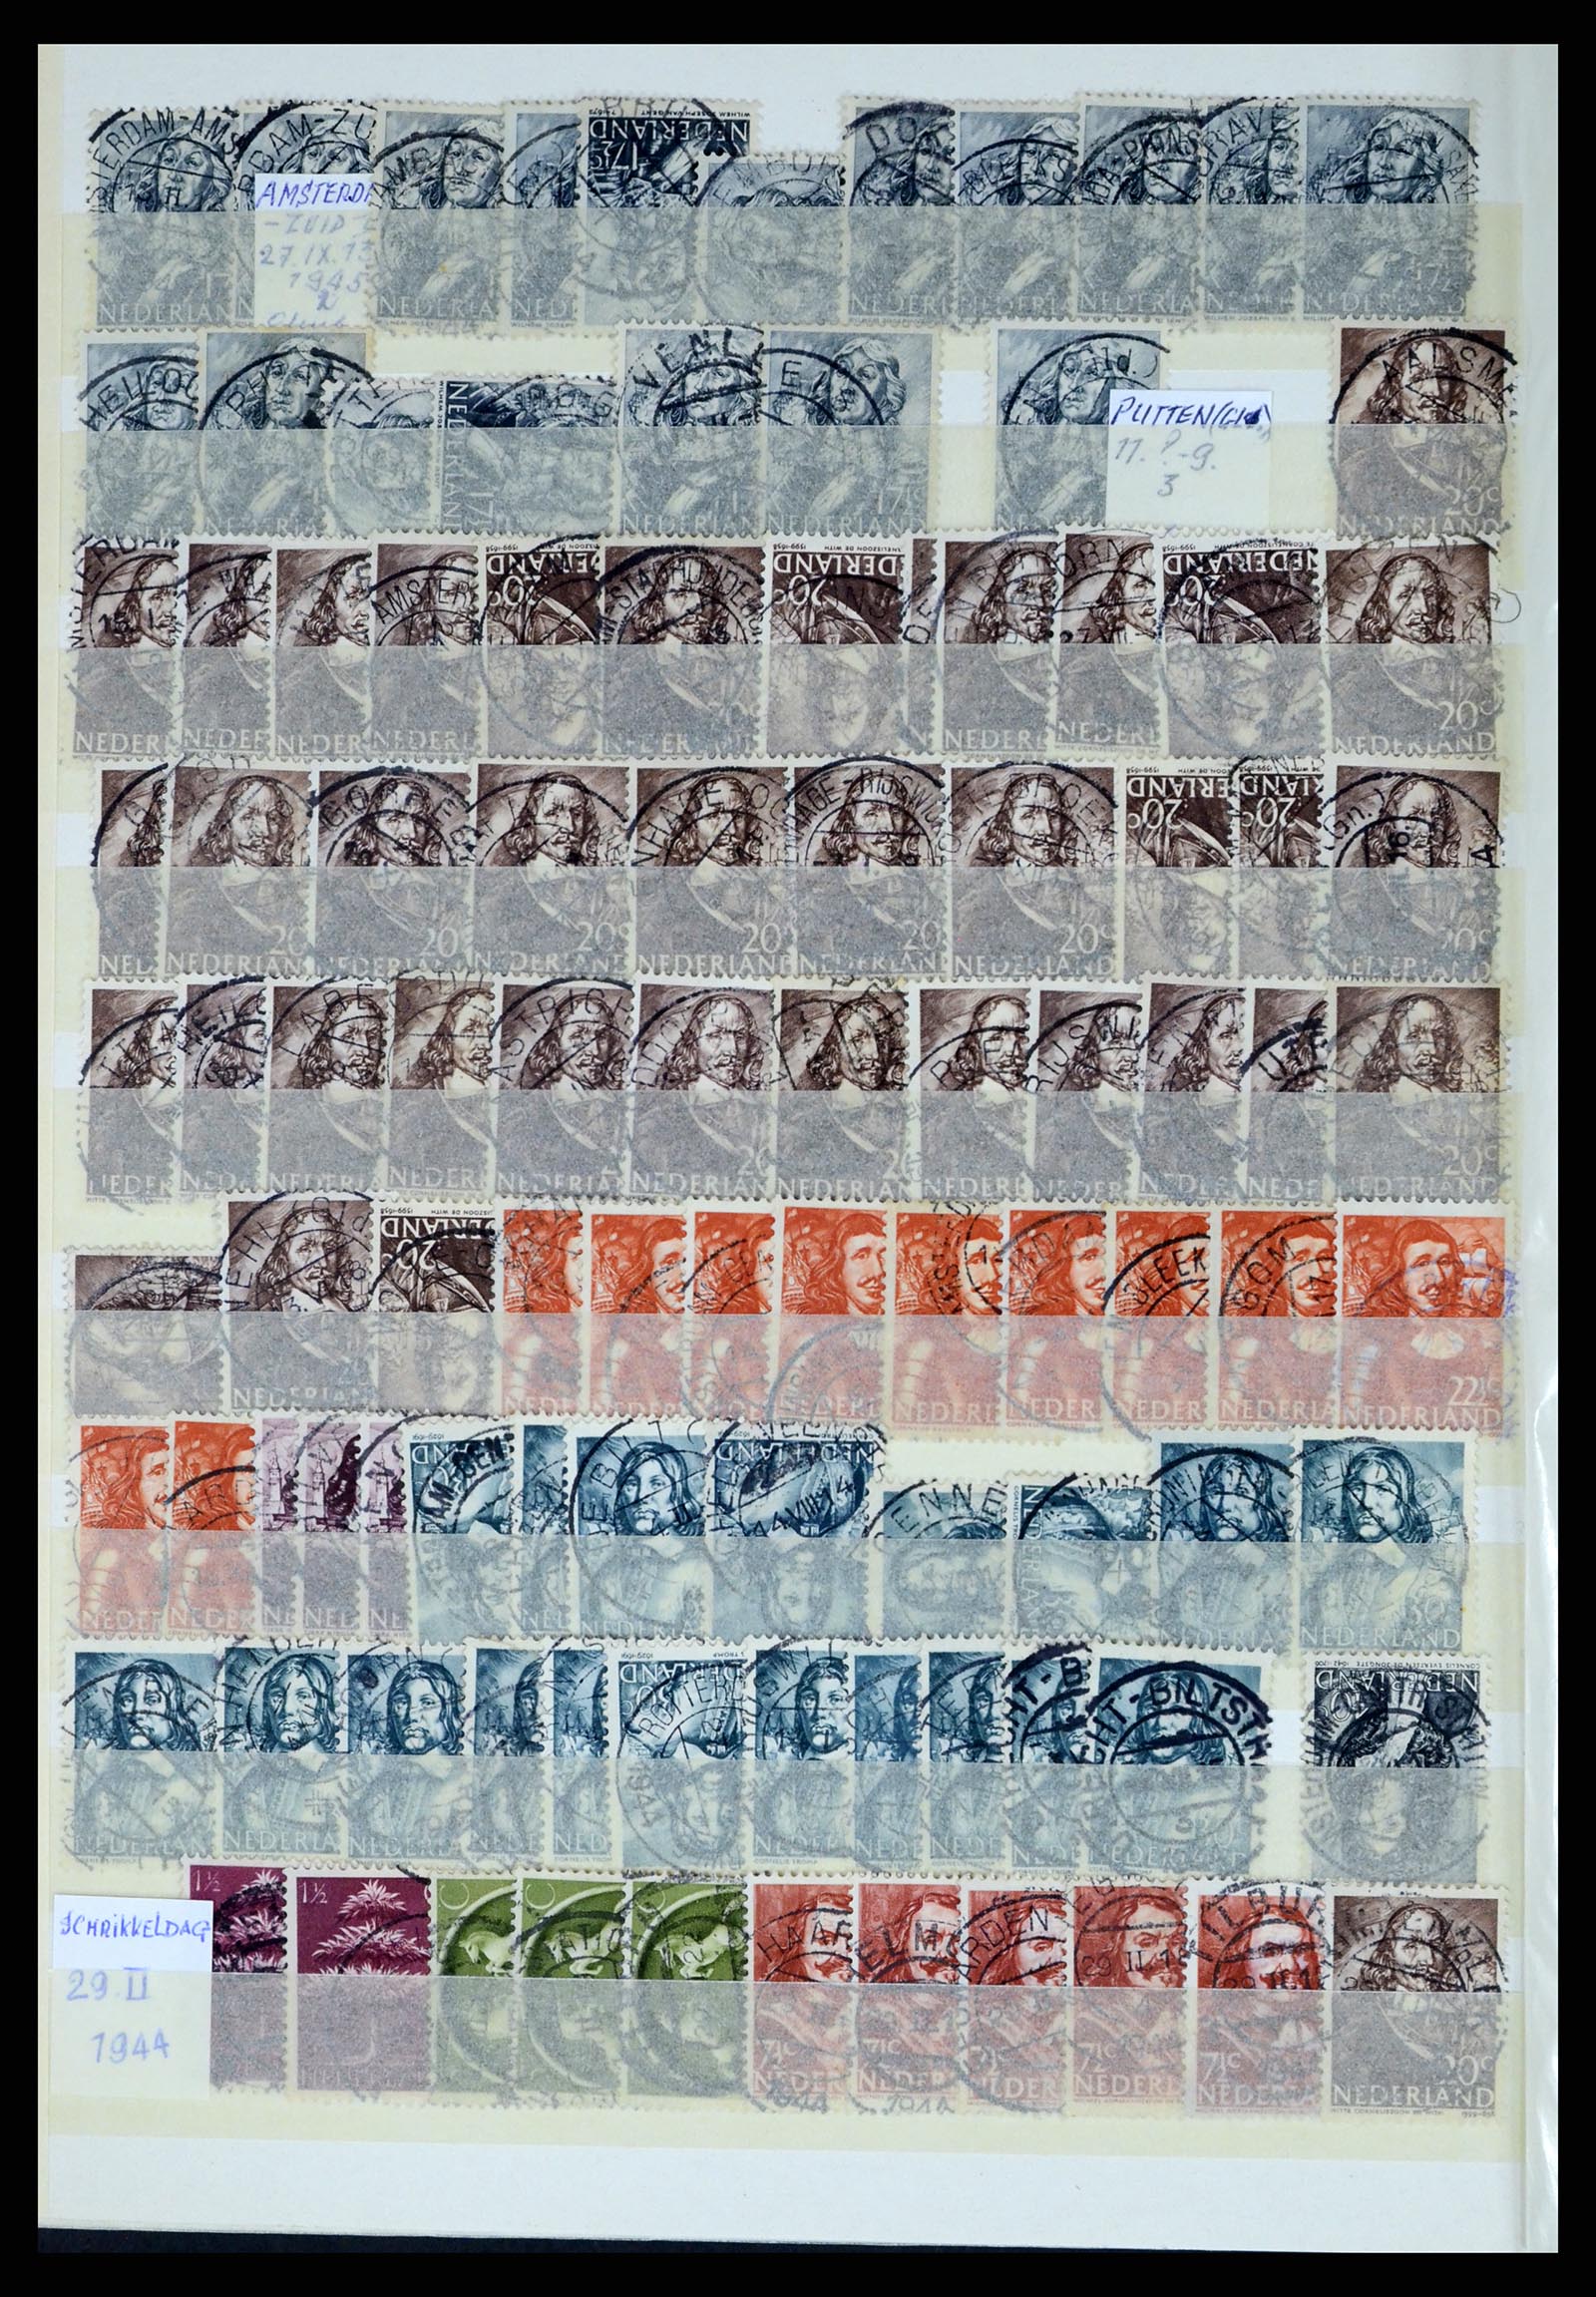 37424 038 - Stamp collection 37424 Netherlands shortbar cancels.